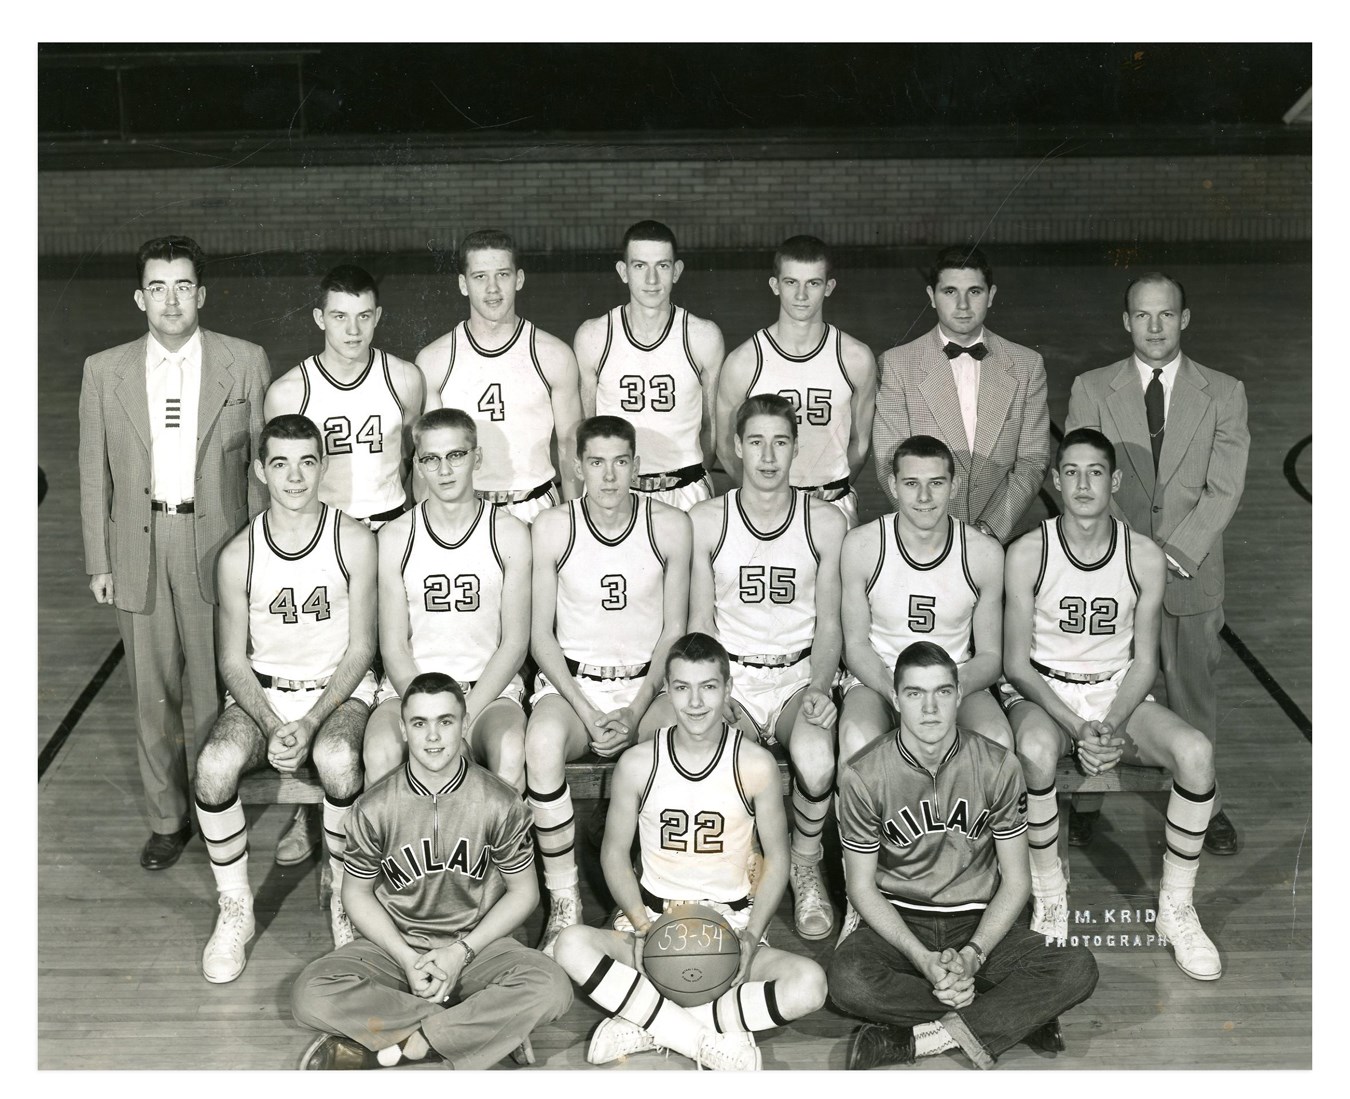 1954 Milan Basketball Team Photos and Program (4)